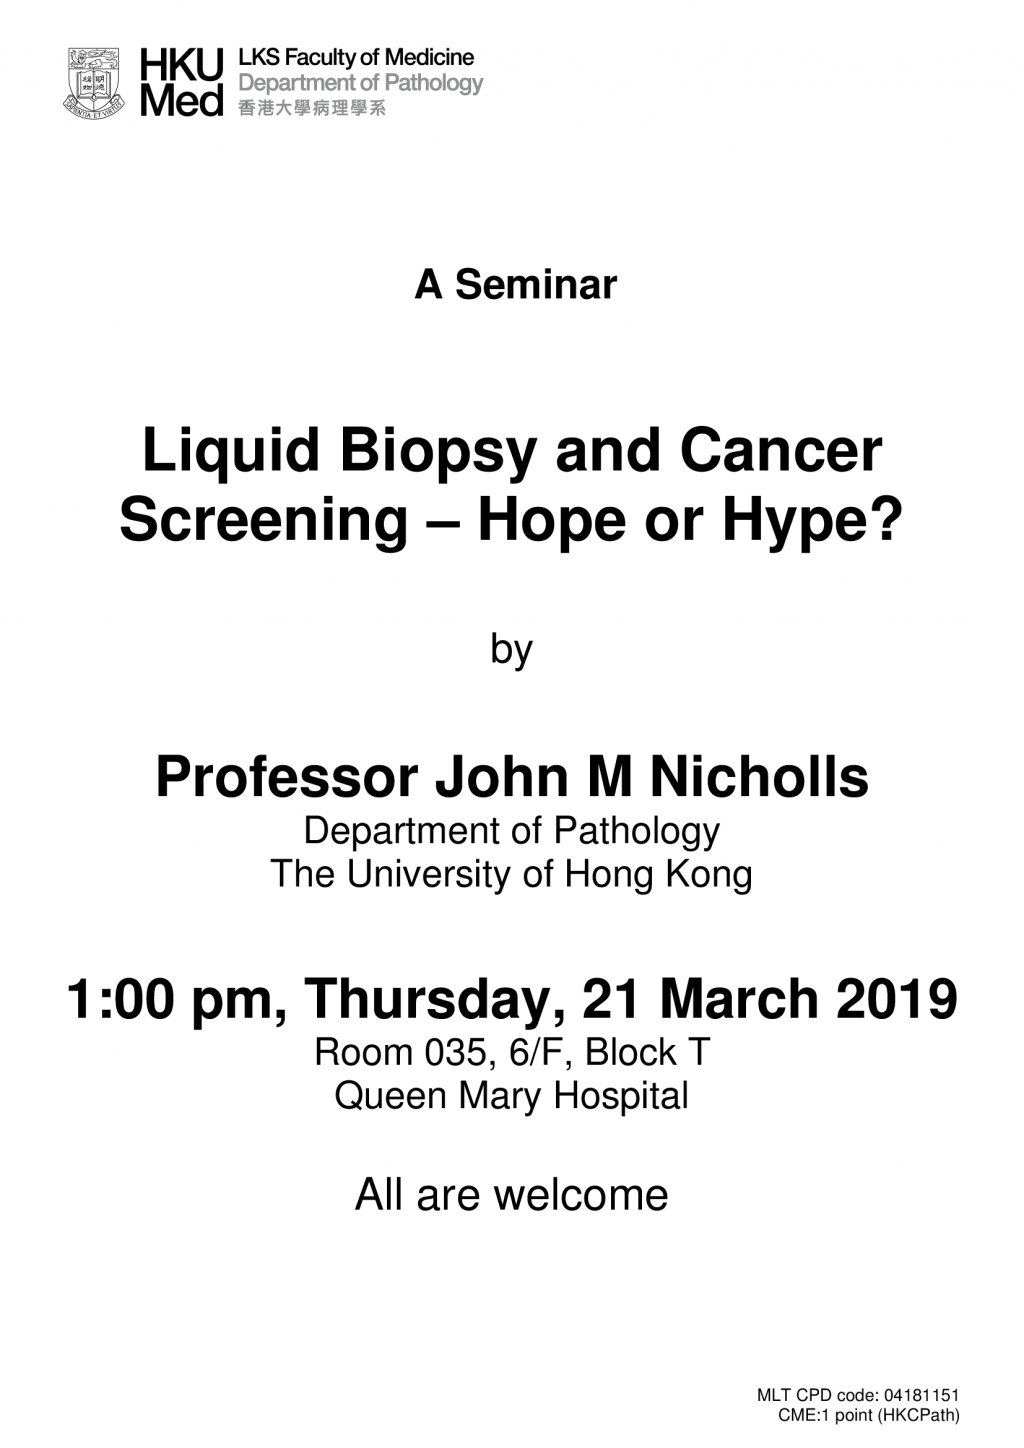 A Seminar by Professor John Nicholls on 21 March 2019 (1pm)